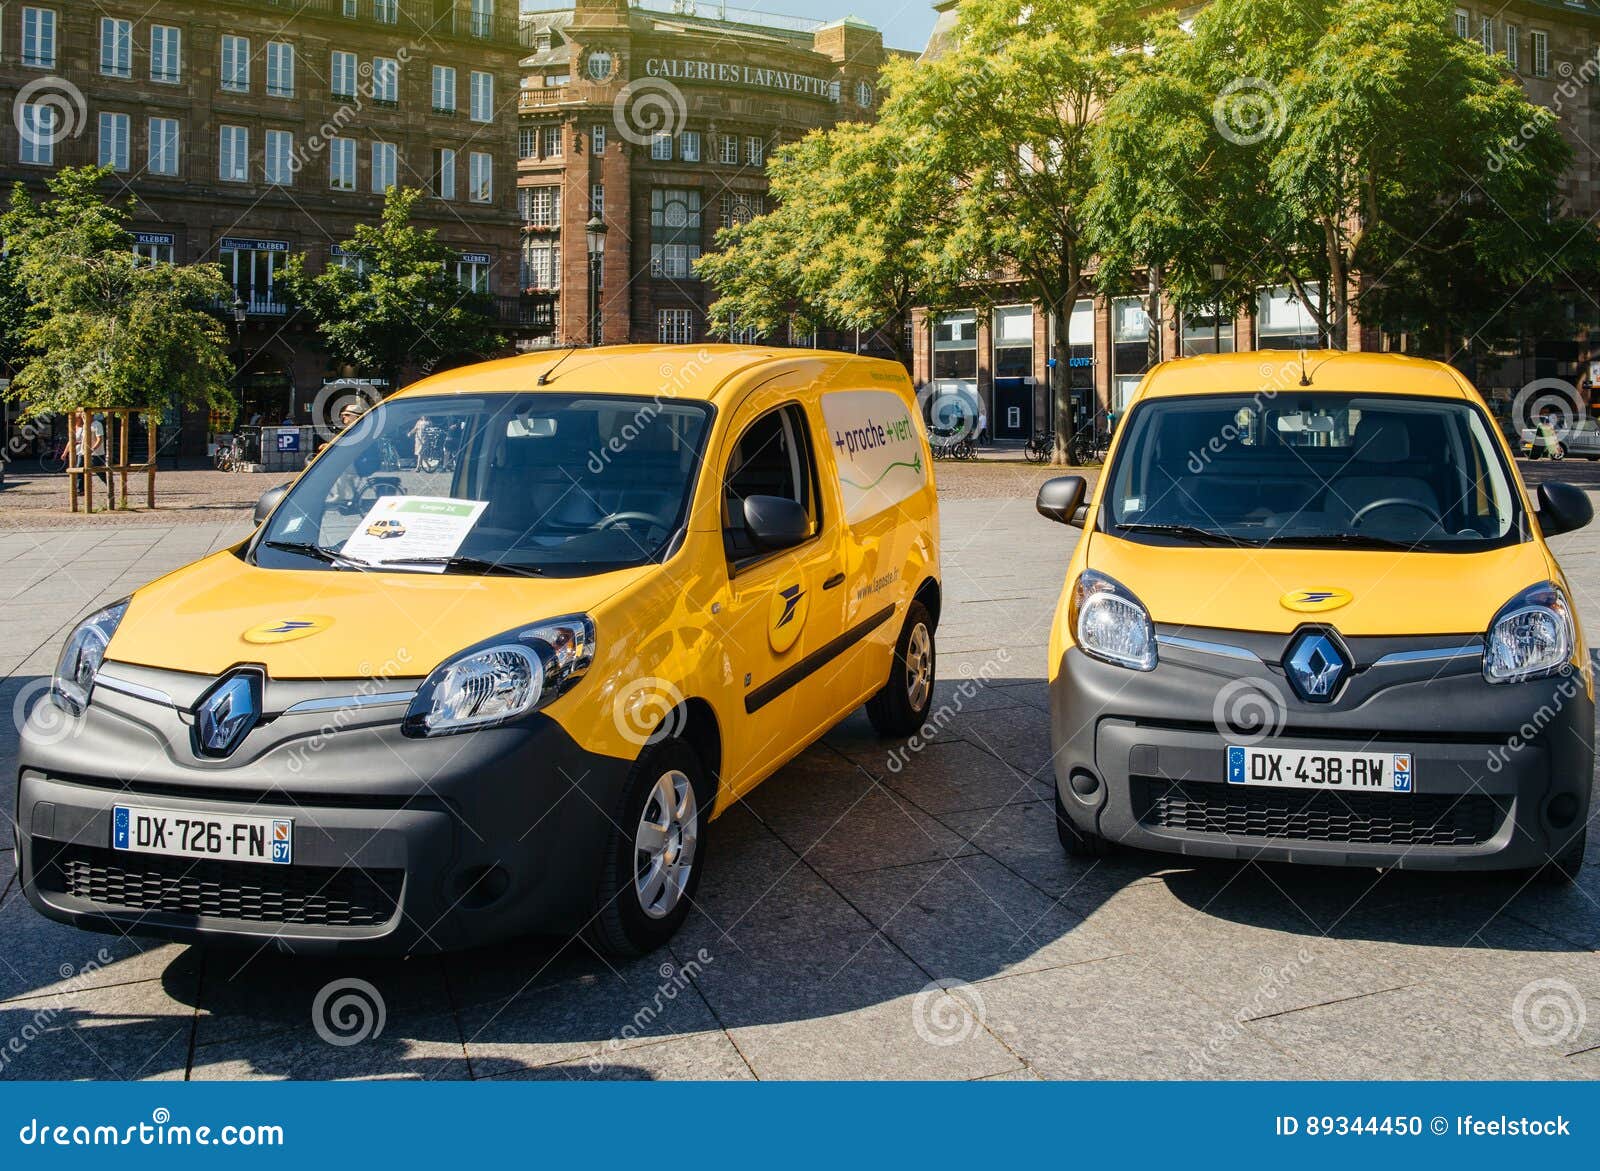 Electric Renault La Poste Vans In Place Kleber Editorial Image ...